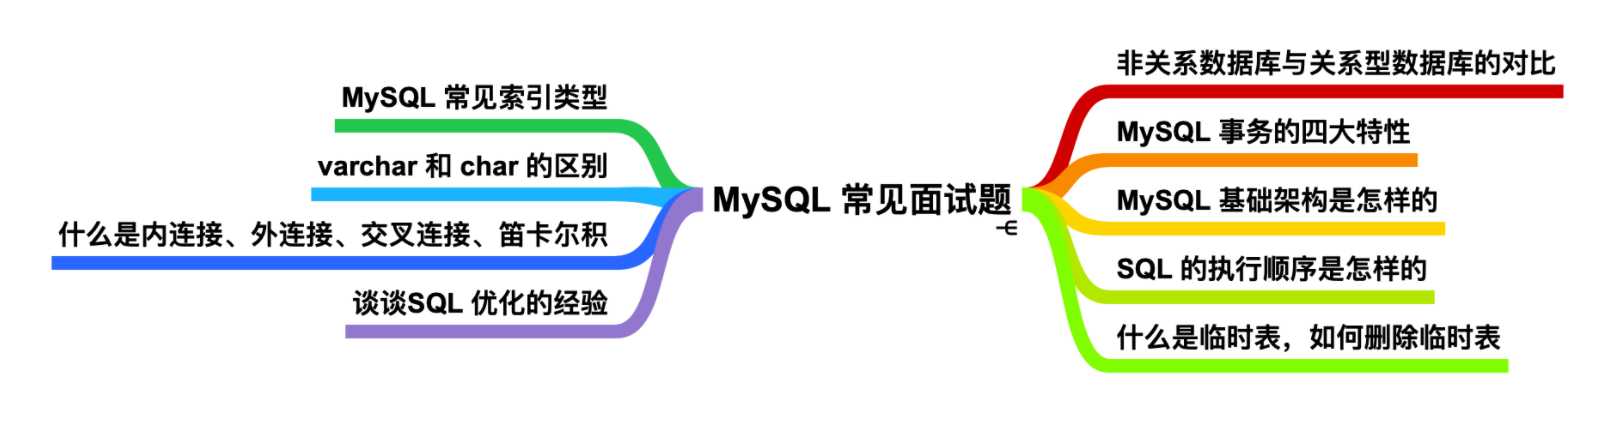 mysql面试题大全_SQL面试题目汇总